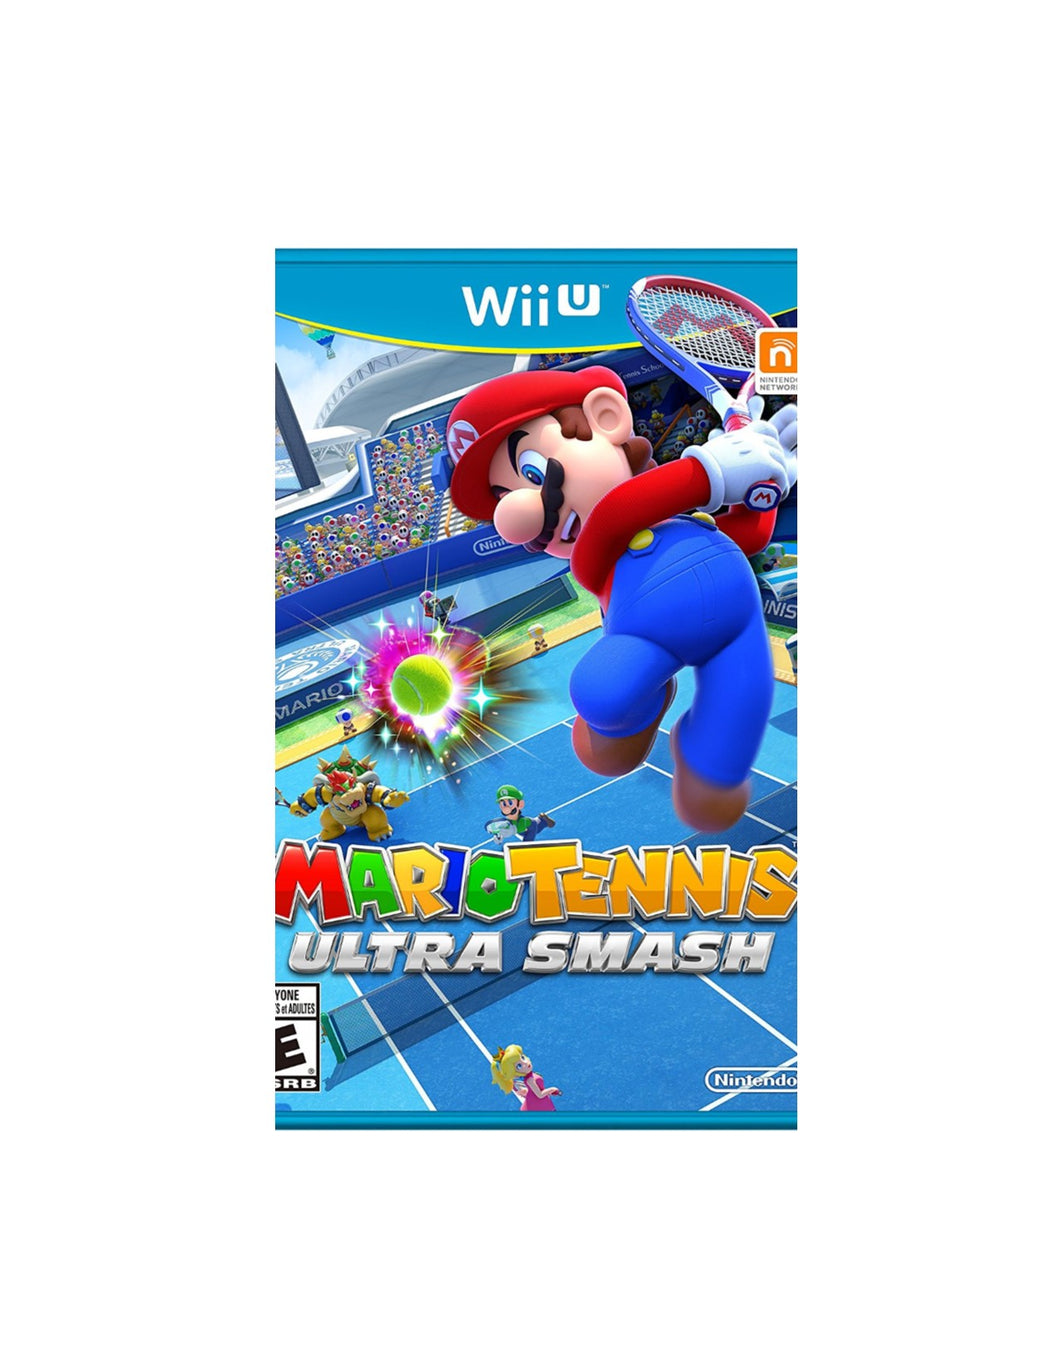 Mario Tennis: Ultra Smash - Wii U